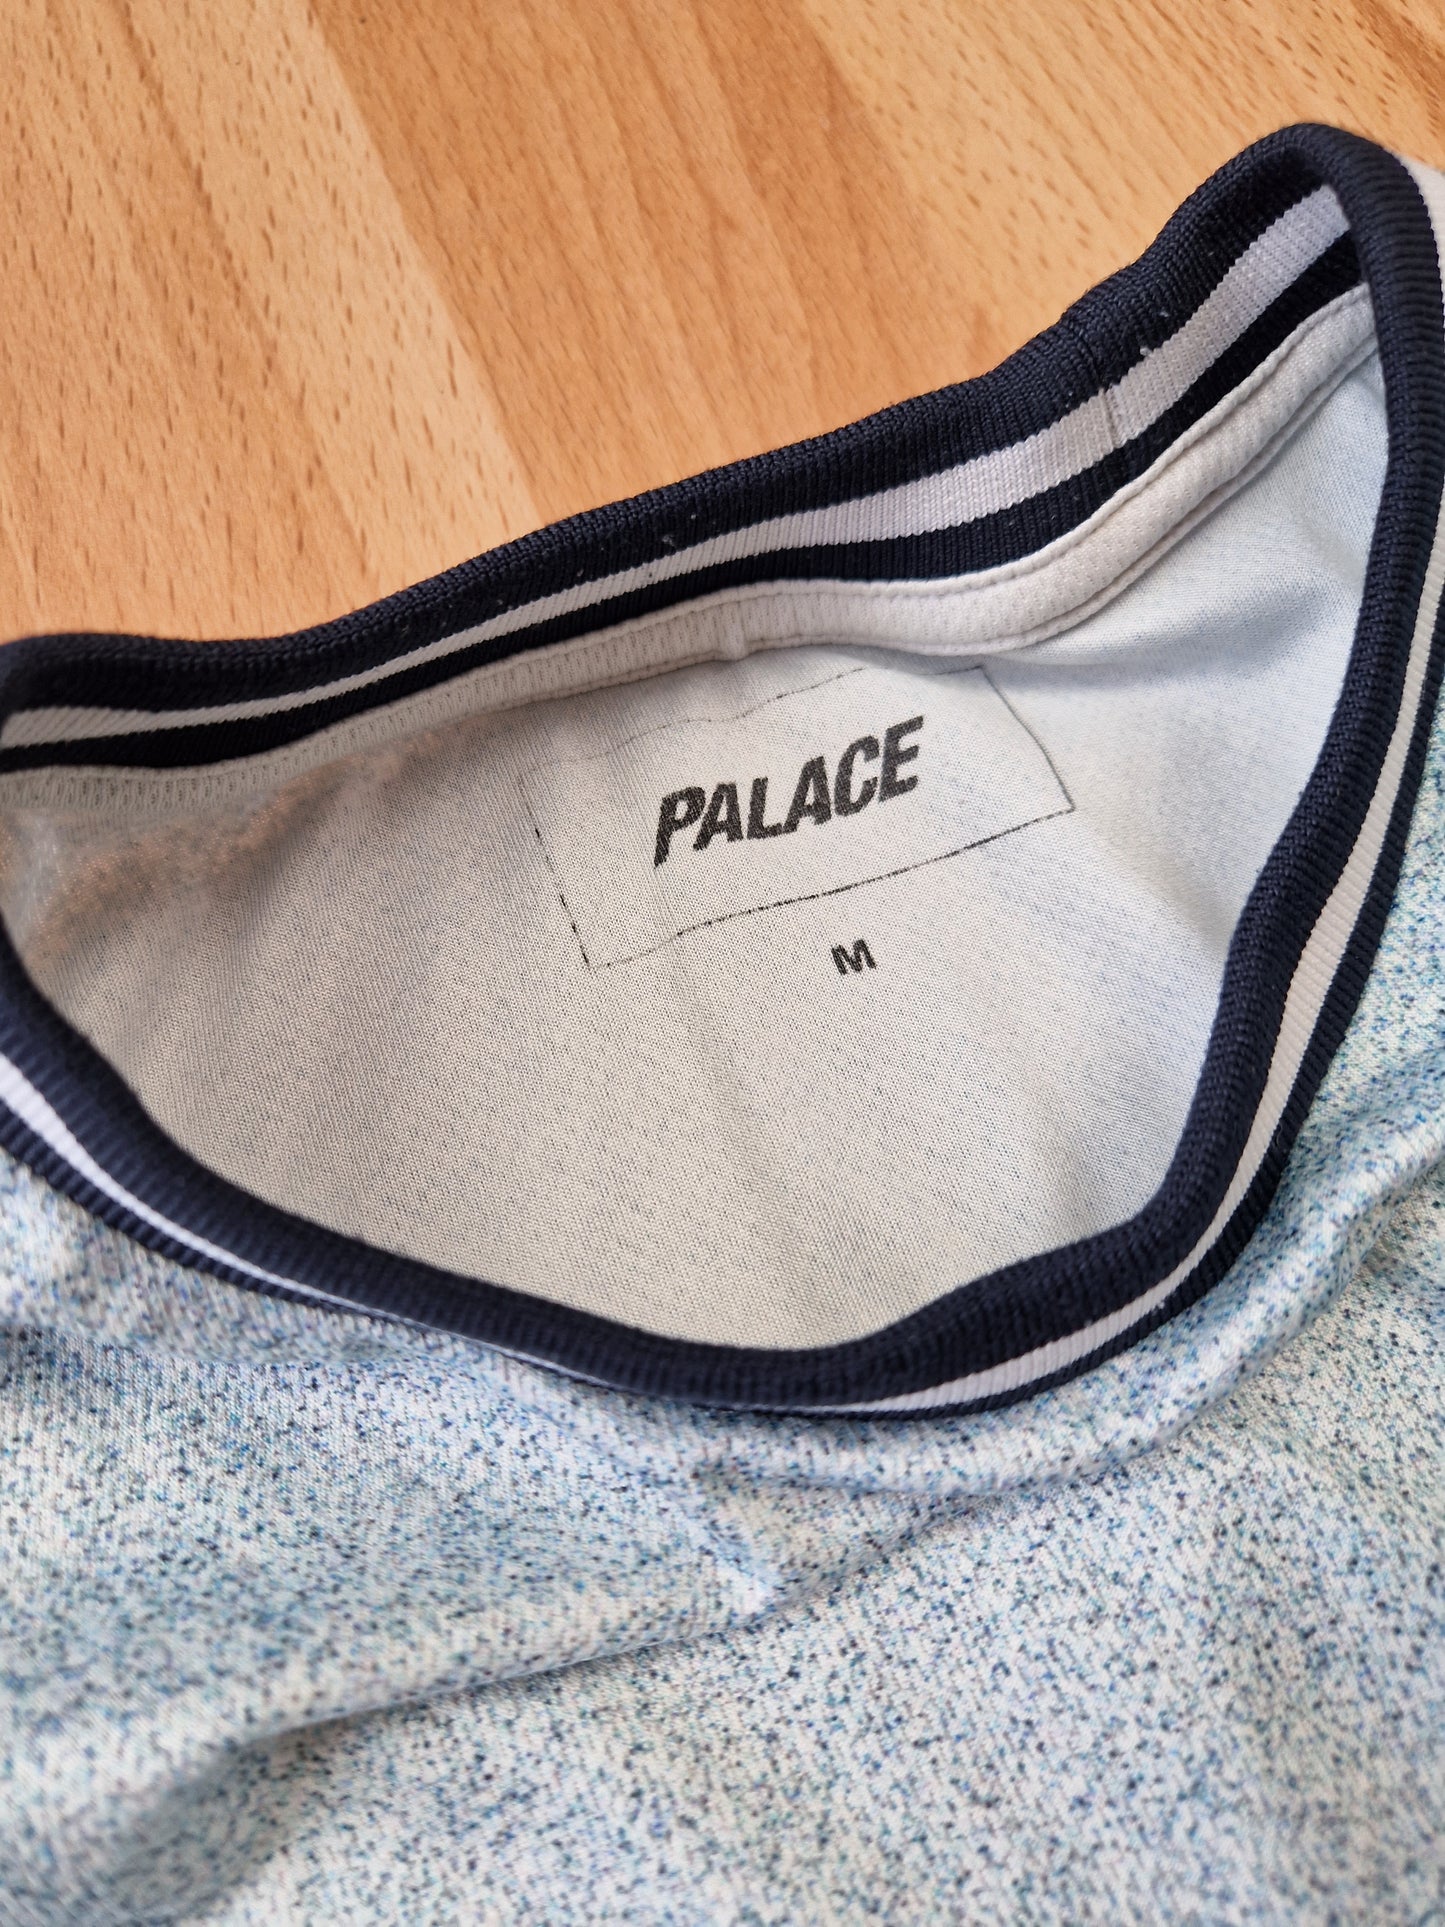 Palace 'Multi Option Footie Jersey' (M)